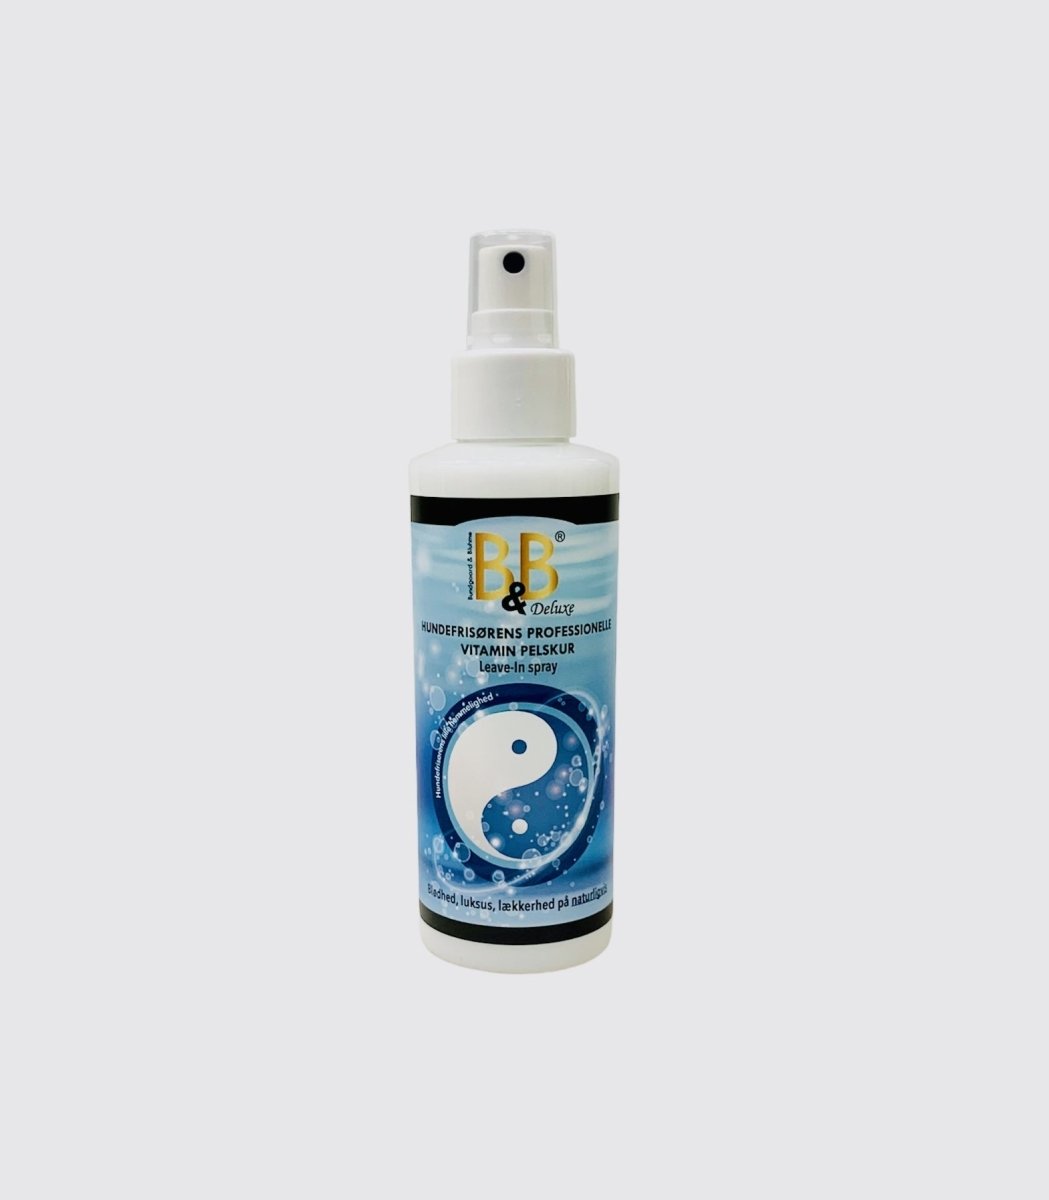 Billede af B&B Leave-In spray Vitamin pelskur hos animondo